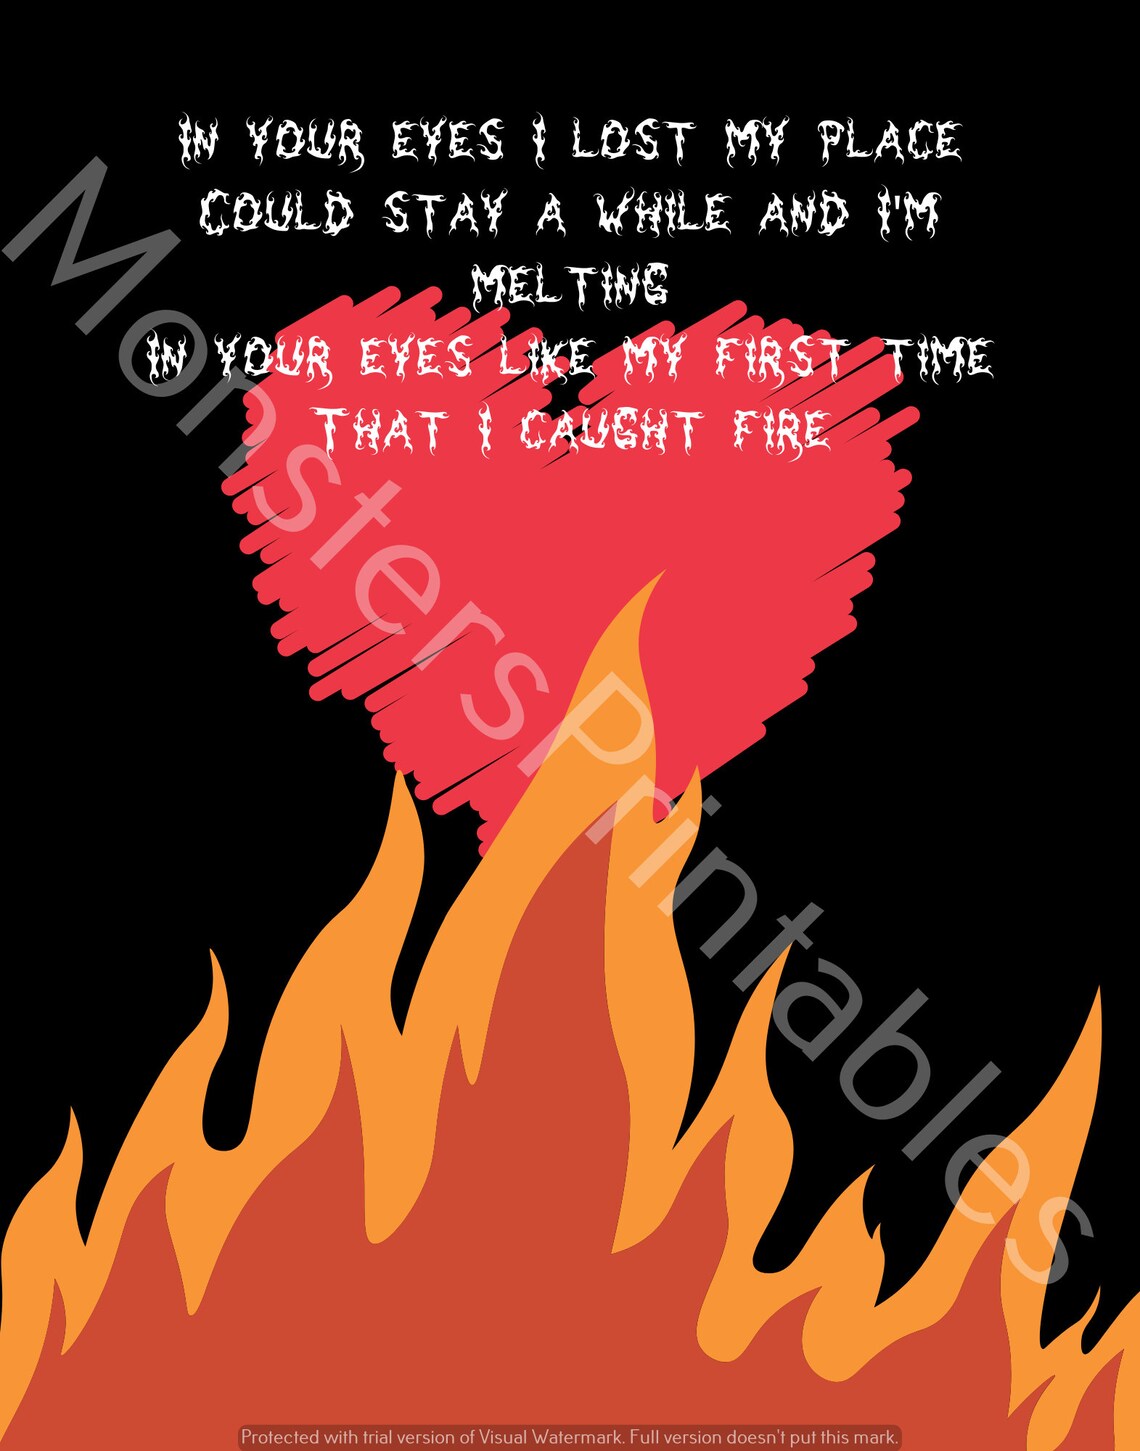 I Caught Fire Emo  love  song lyrics  Poster Etsy